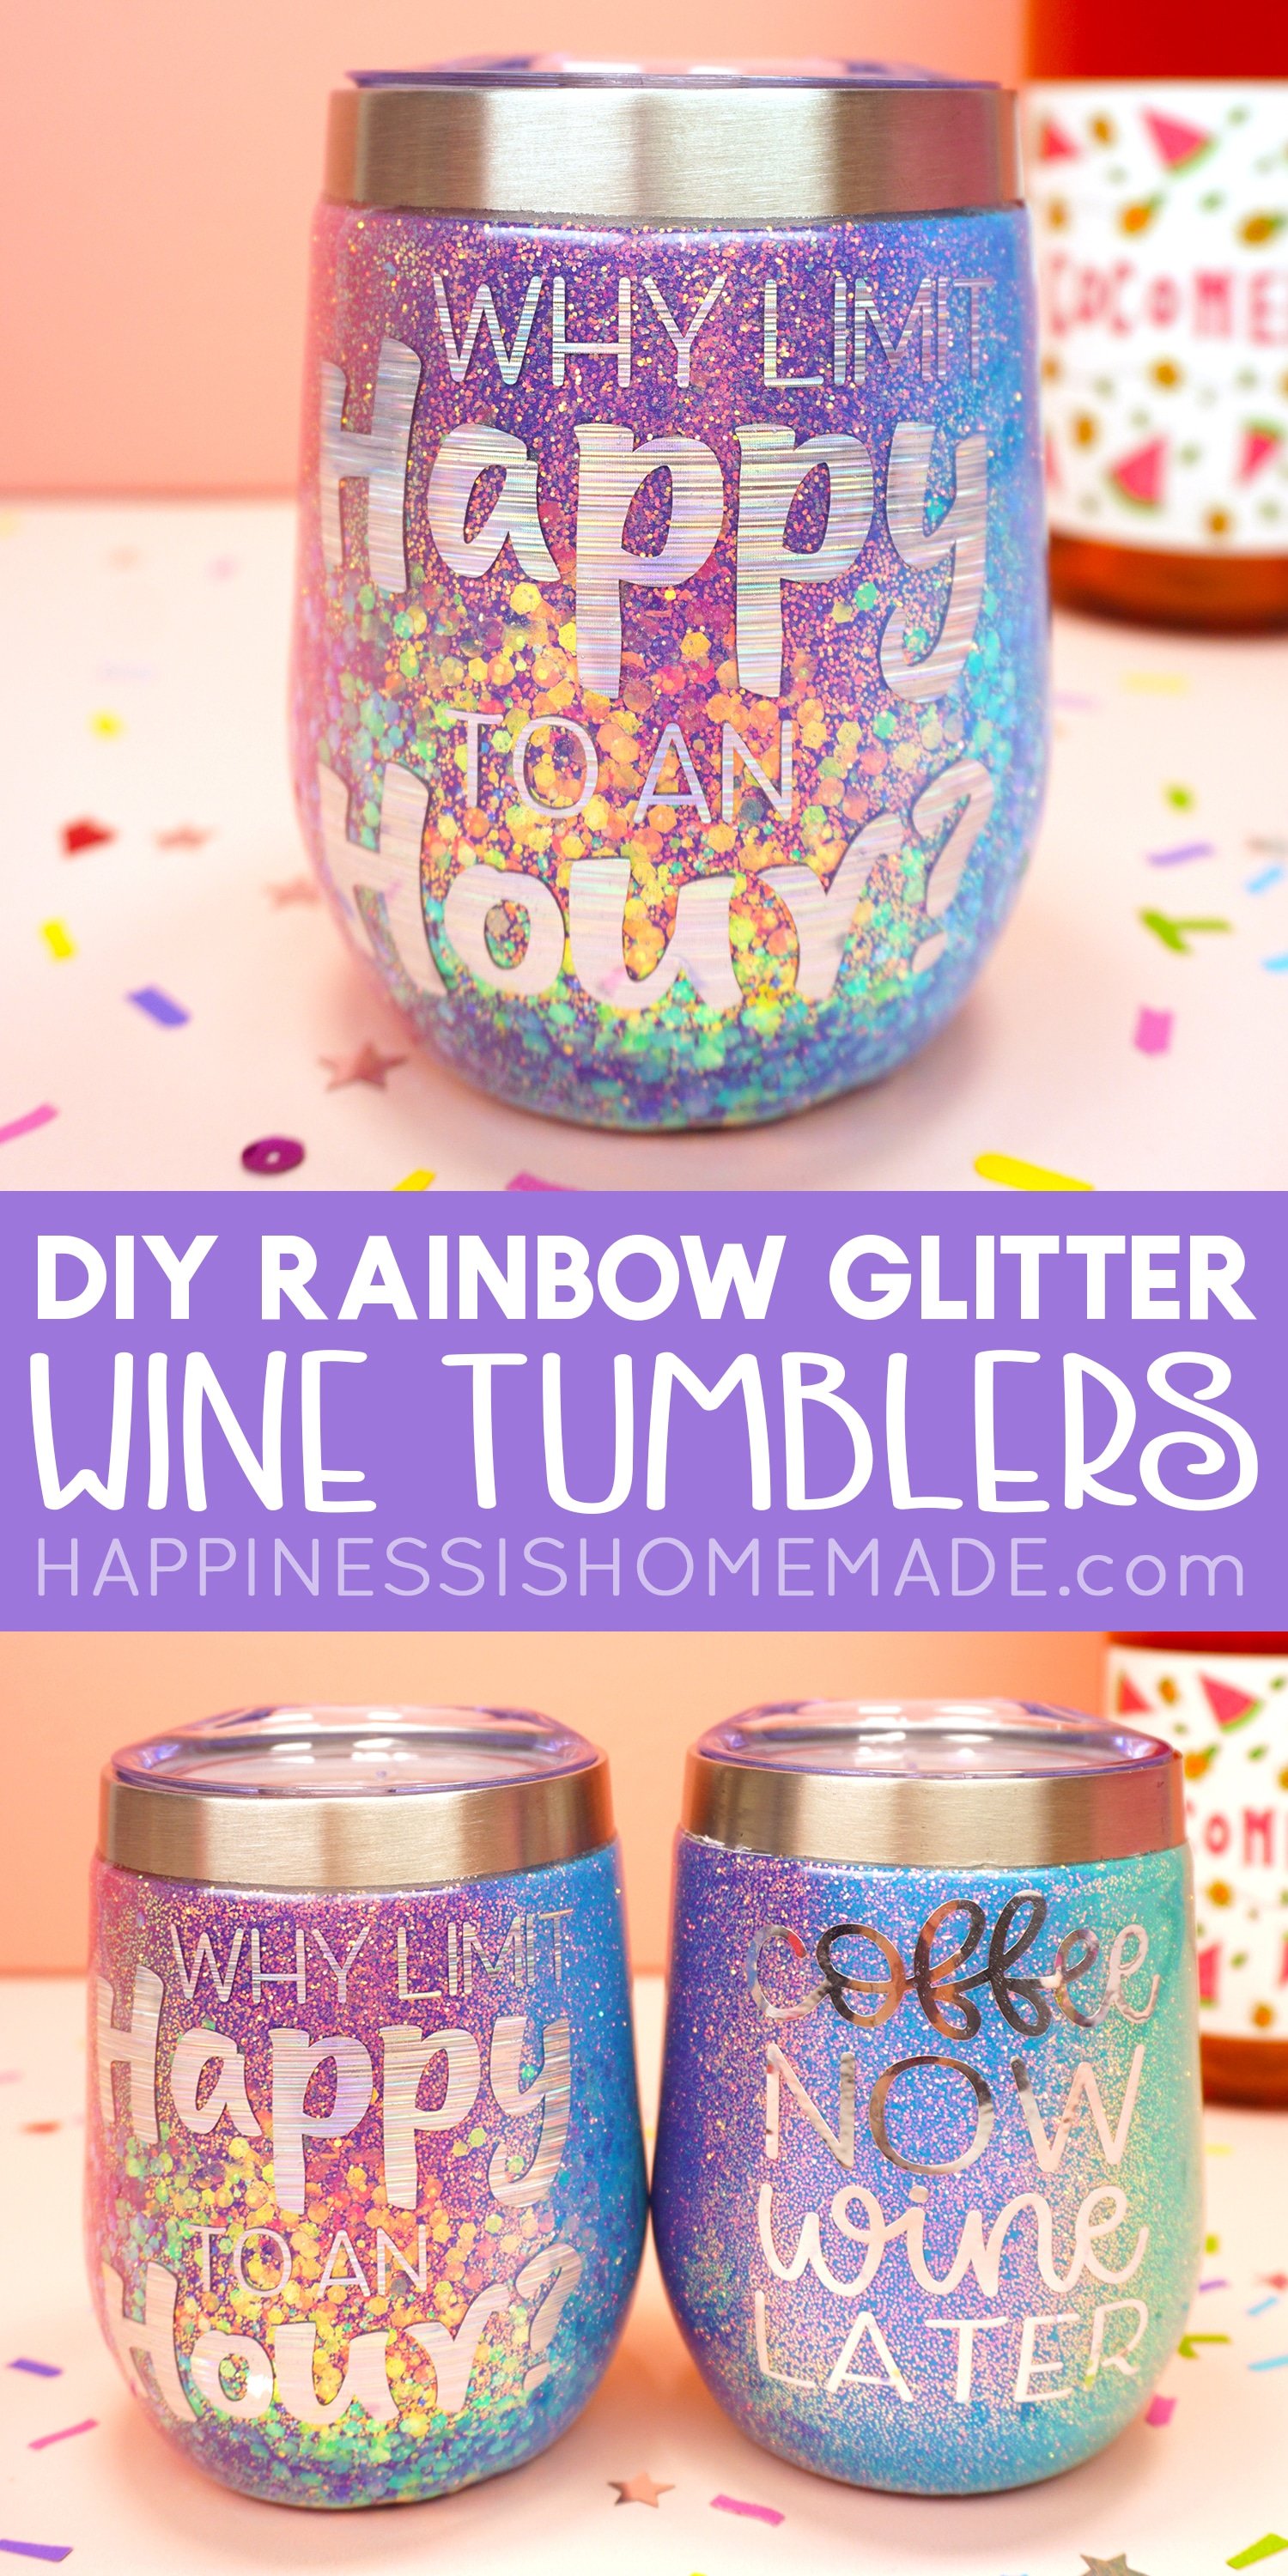 DIY rainbow glitter wine tumblers